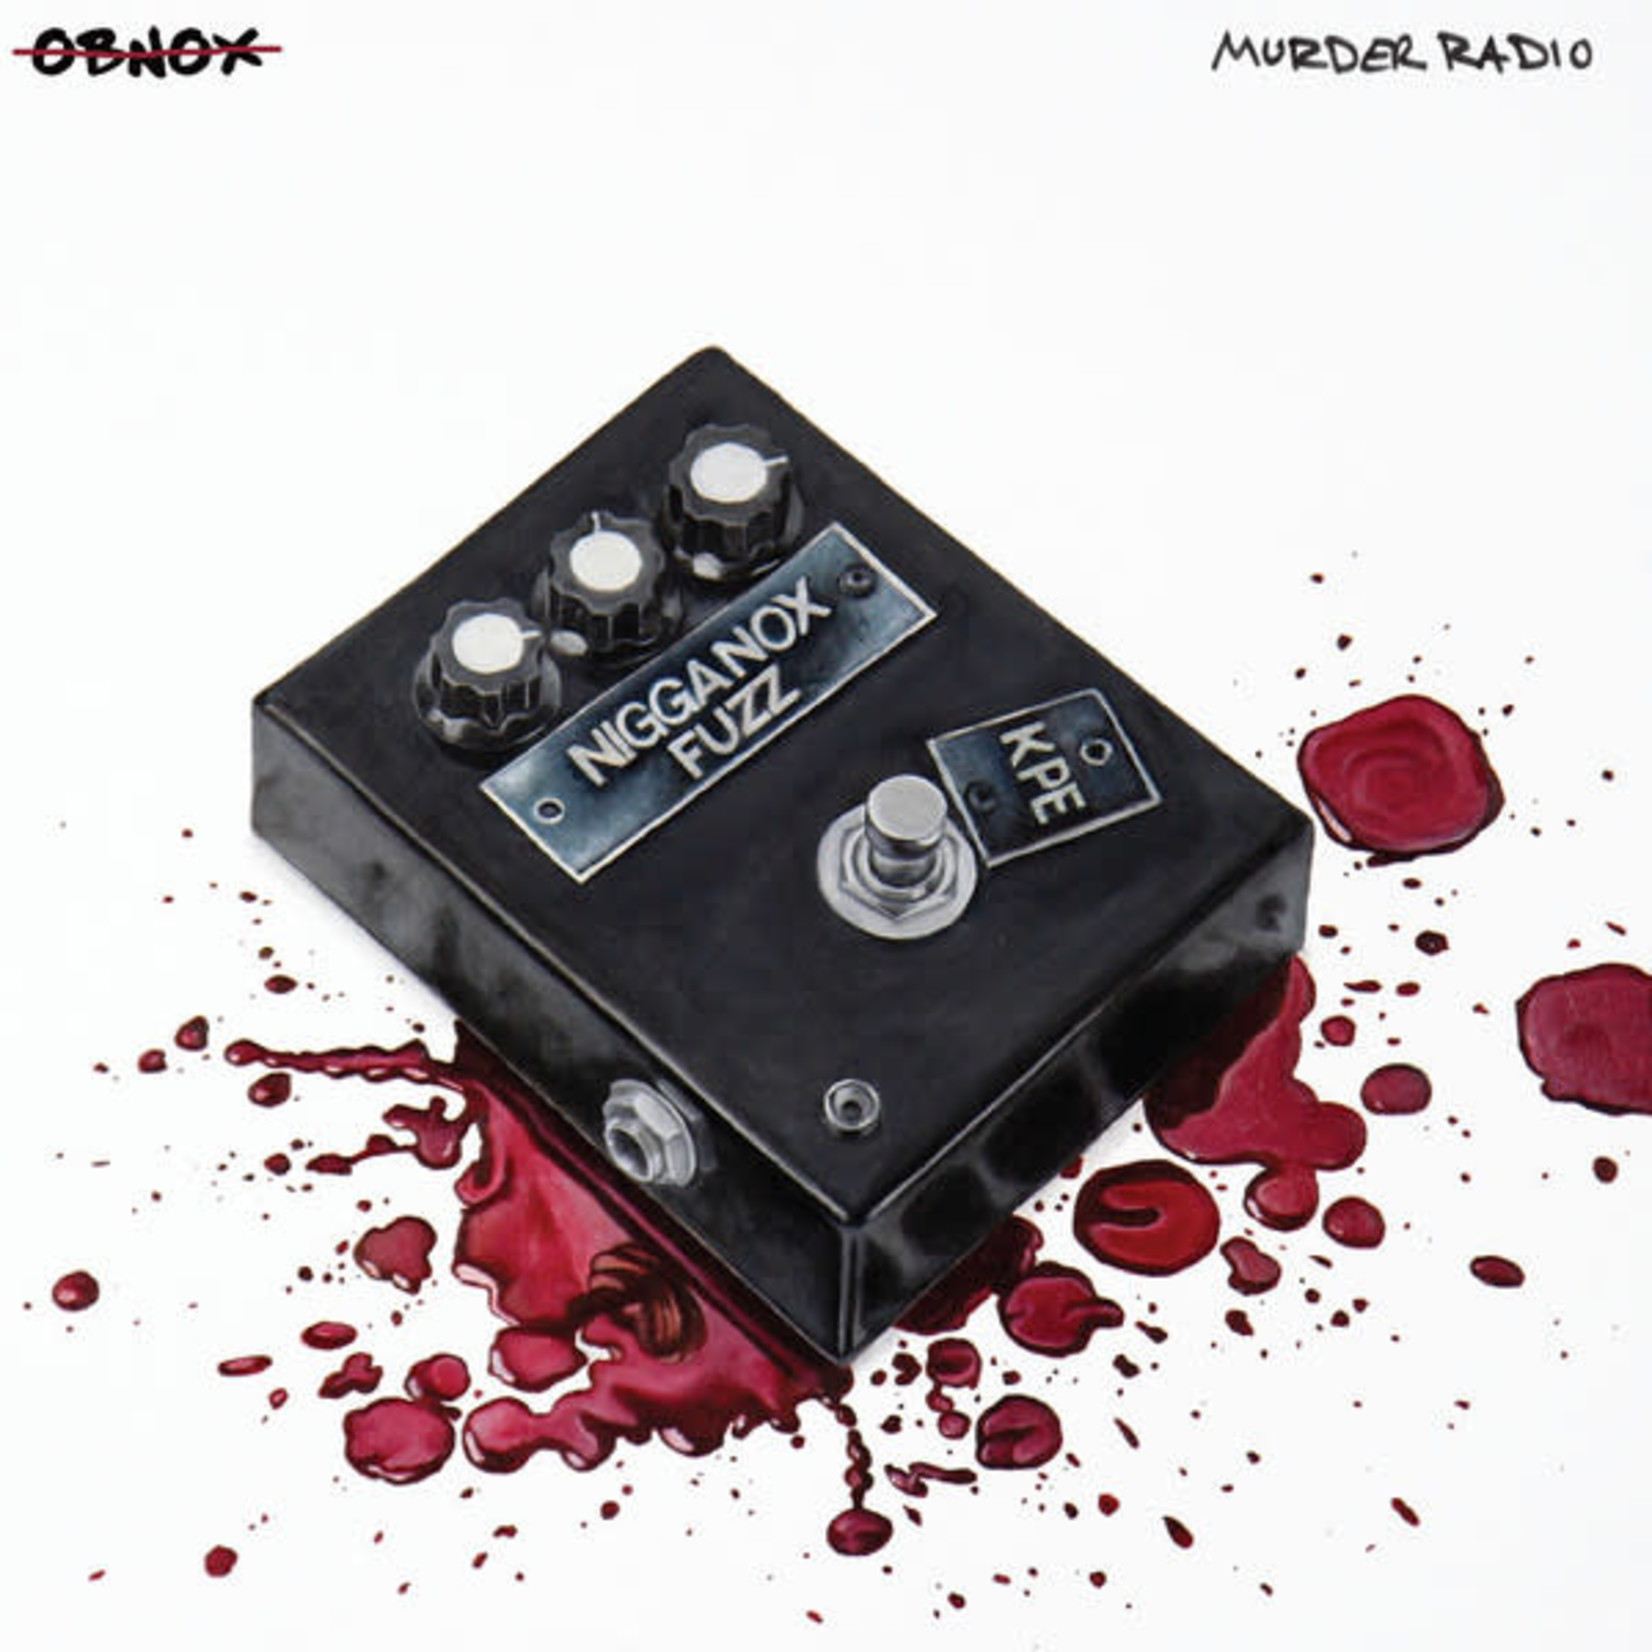 Obnox - Murder Radio (LP)